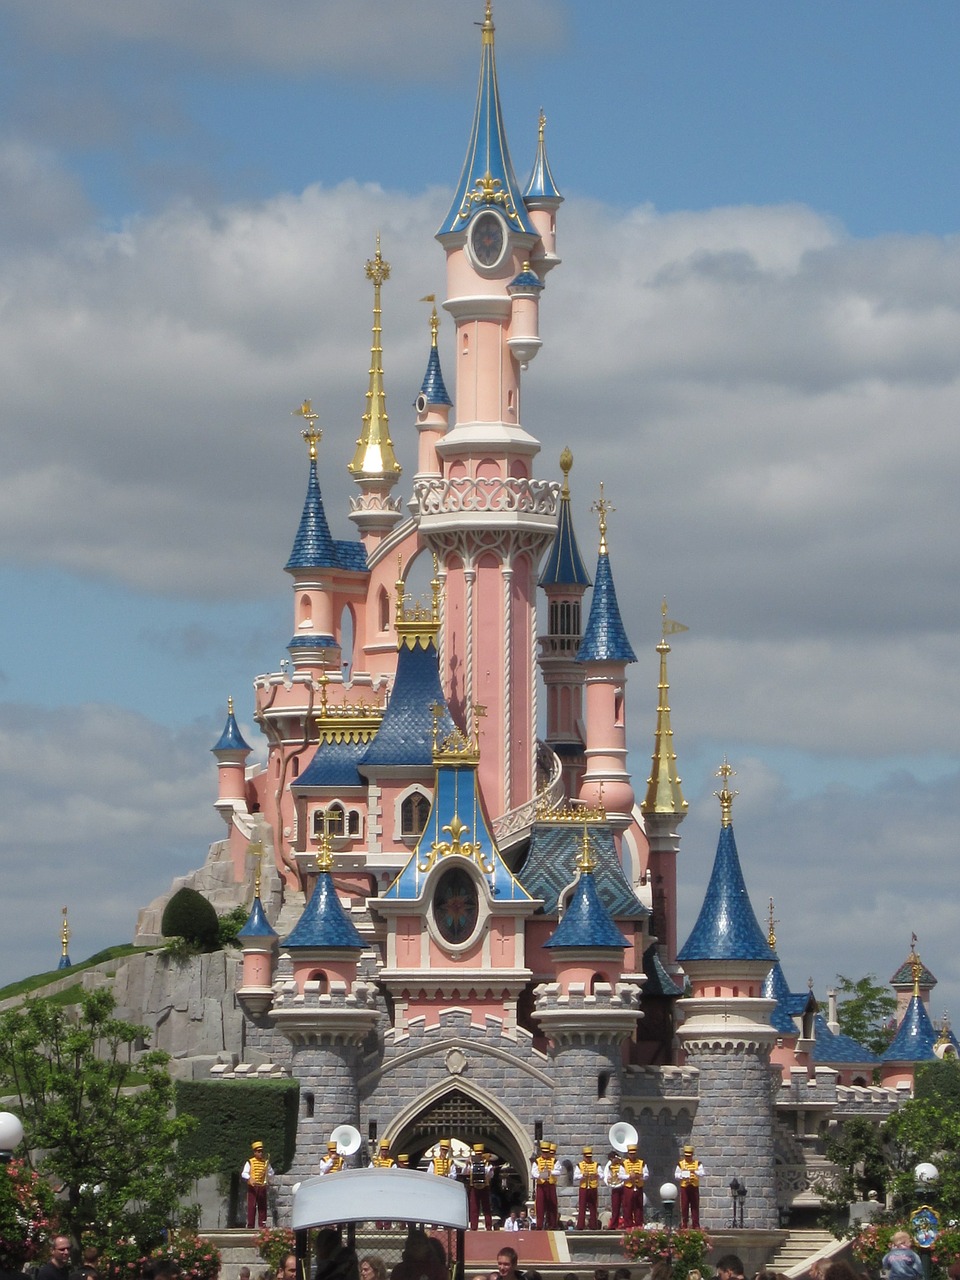 eurodisney castle fairy tale free photo